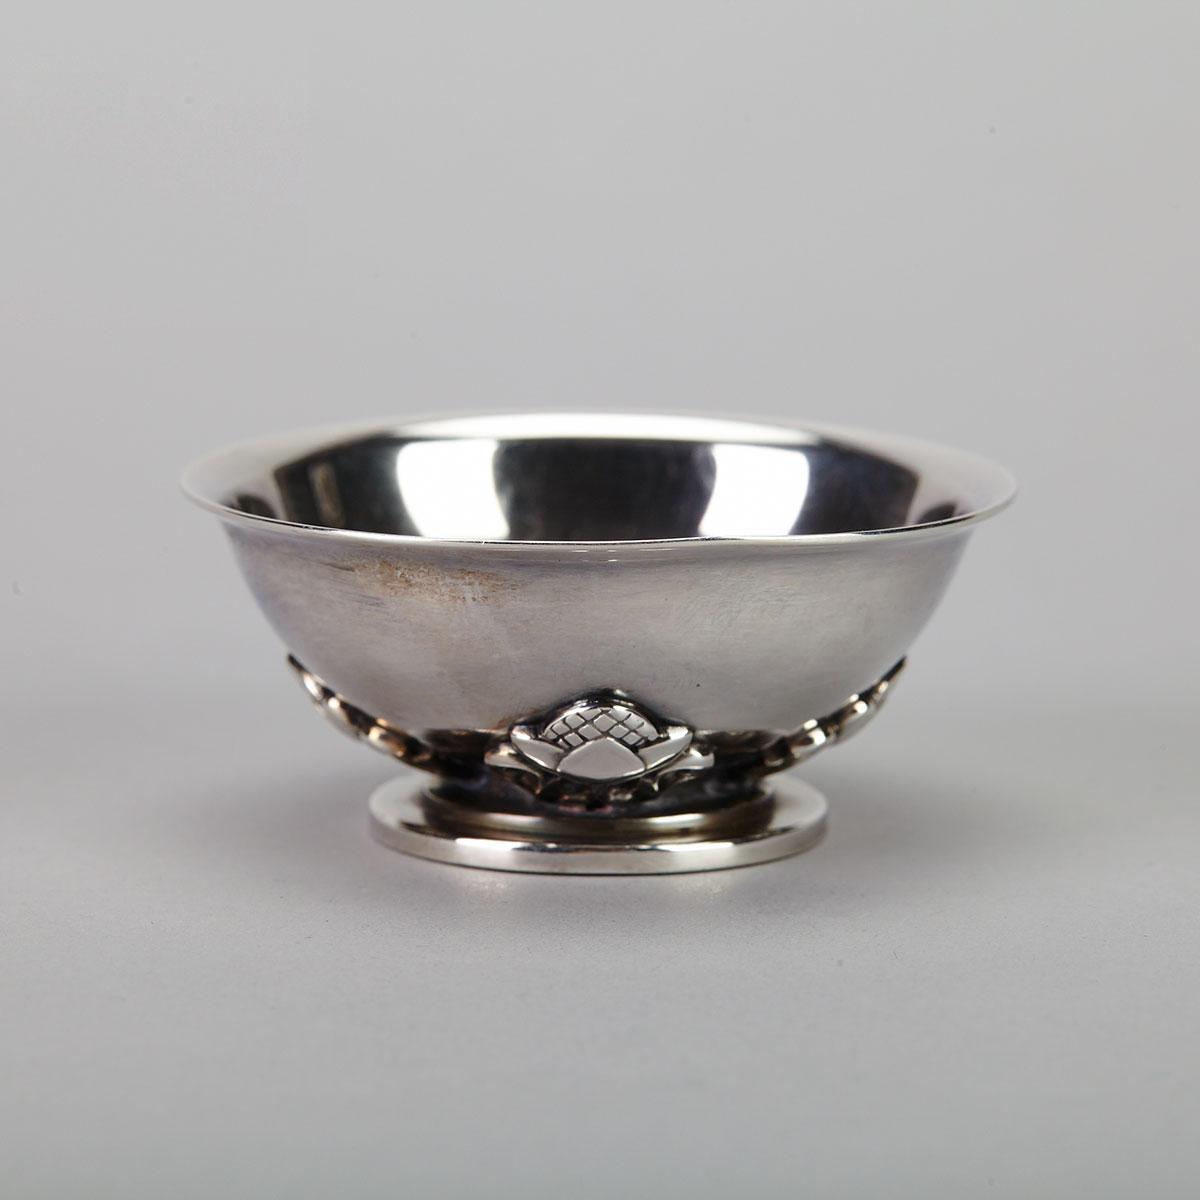 Danish Silver ‘Acorn’ Pattern Small Condiment Dish, #662, Johan Rohde for Georg Jensen, Copenhagen, mid-20th century